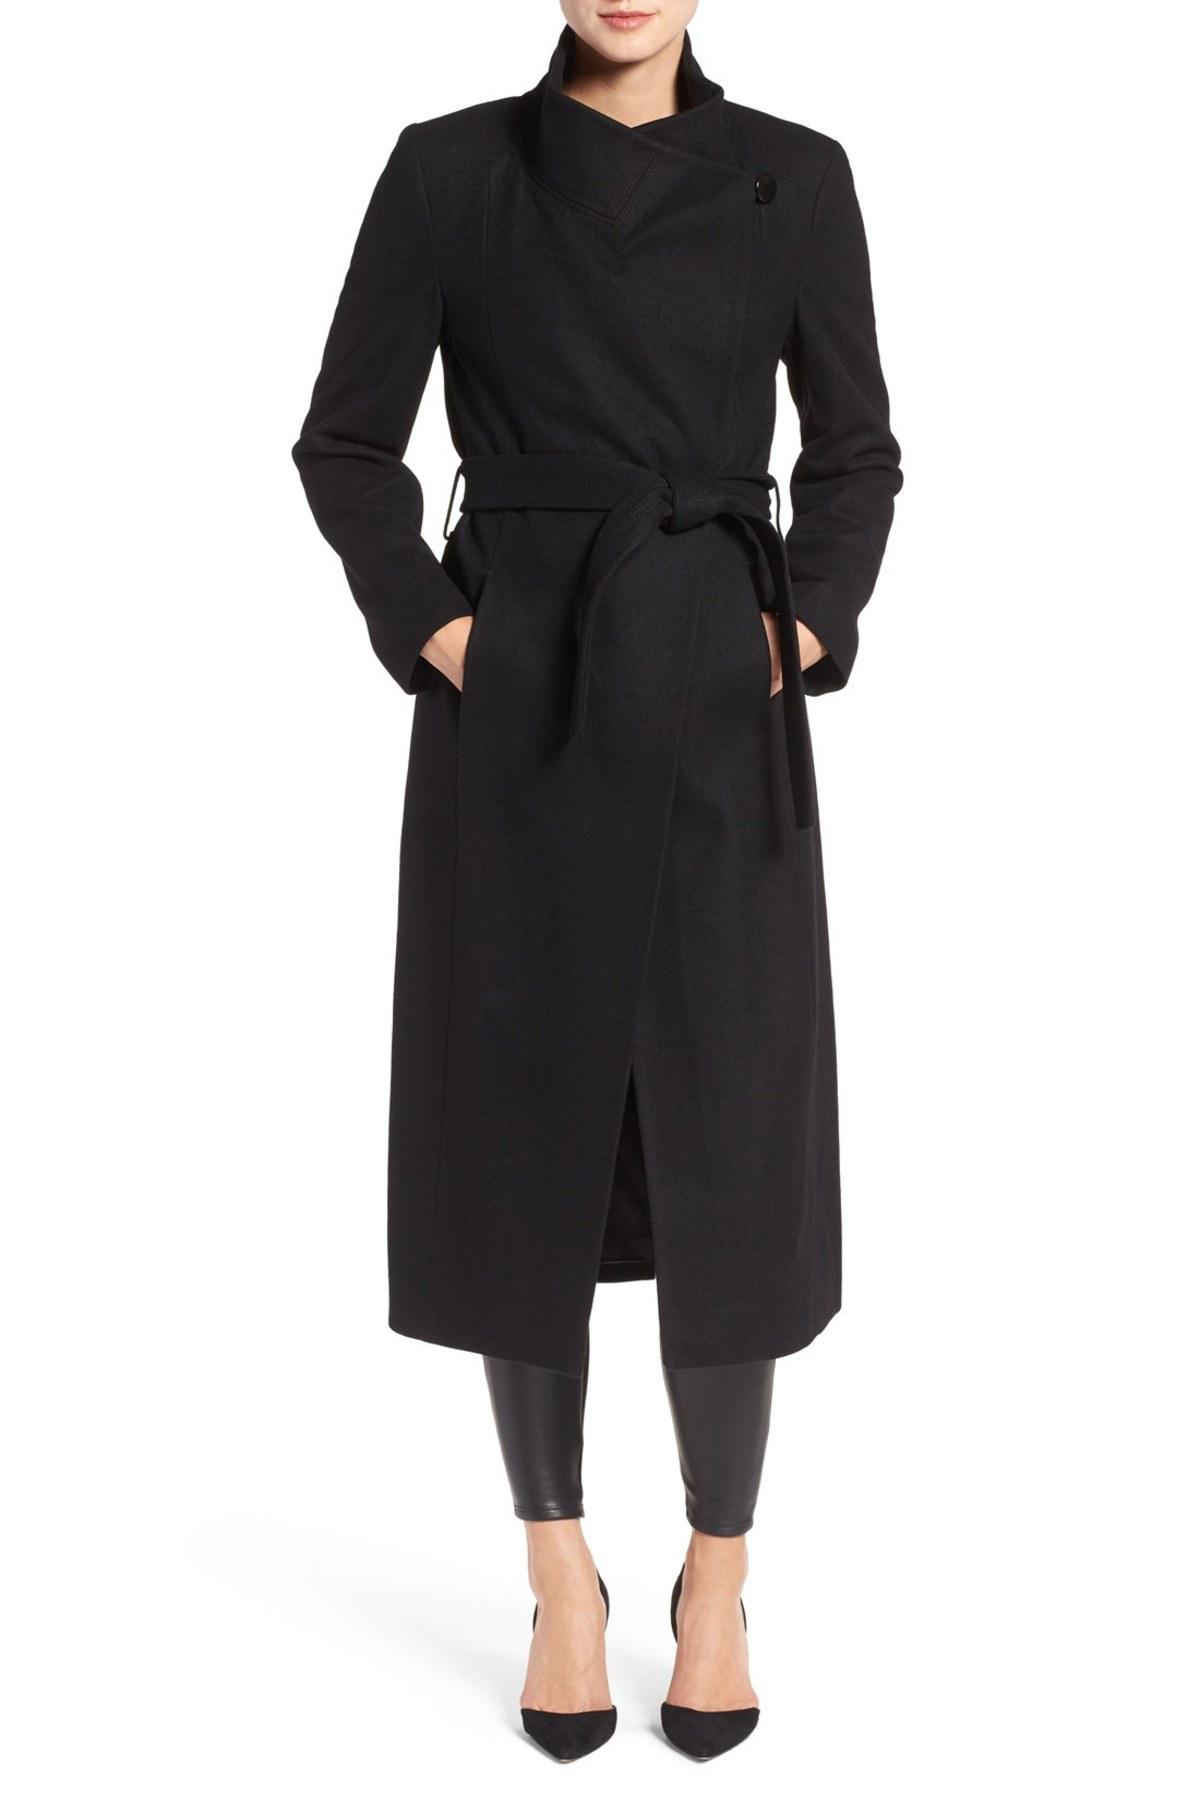 Lyst - Kenneth Cole Wool Blend Maxi Wrap Coat in Black